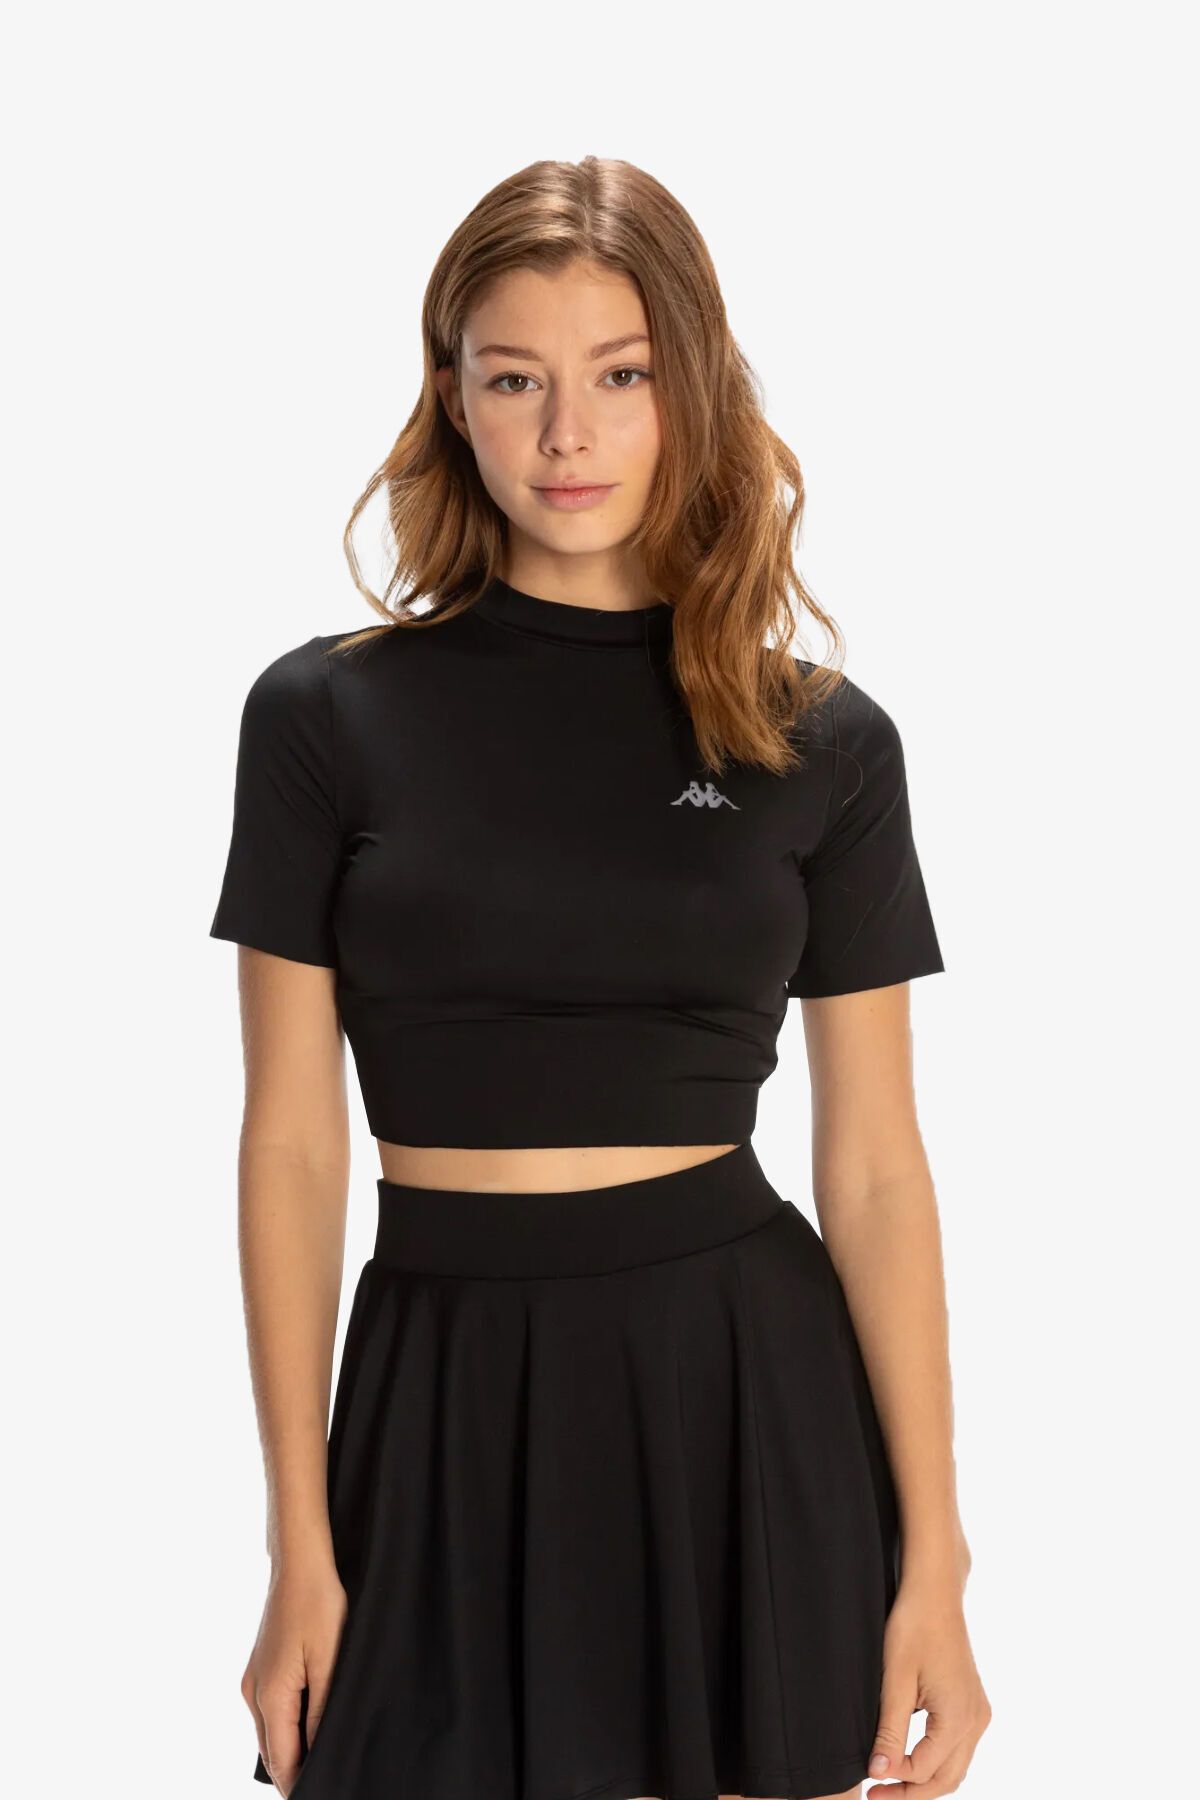 Kappa Fetsu Short Sleeve Kadın Siyah T-Shirt 361P8KW-005